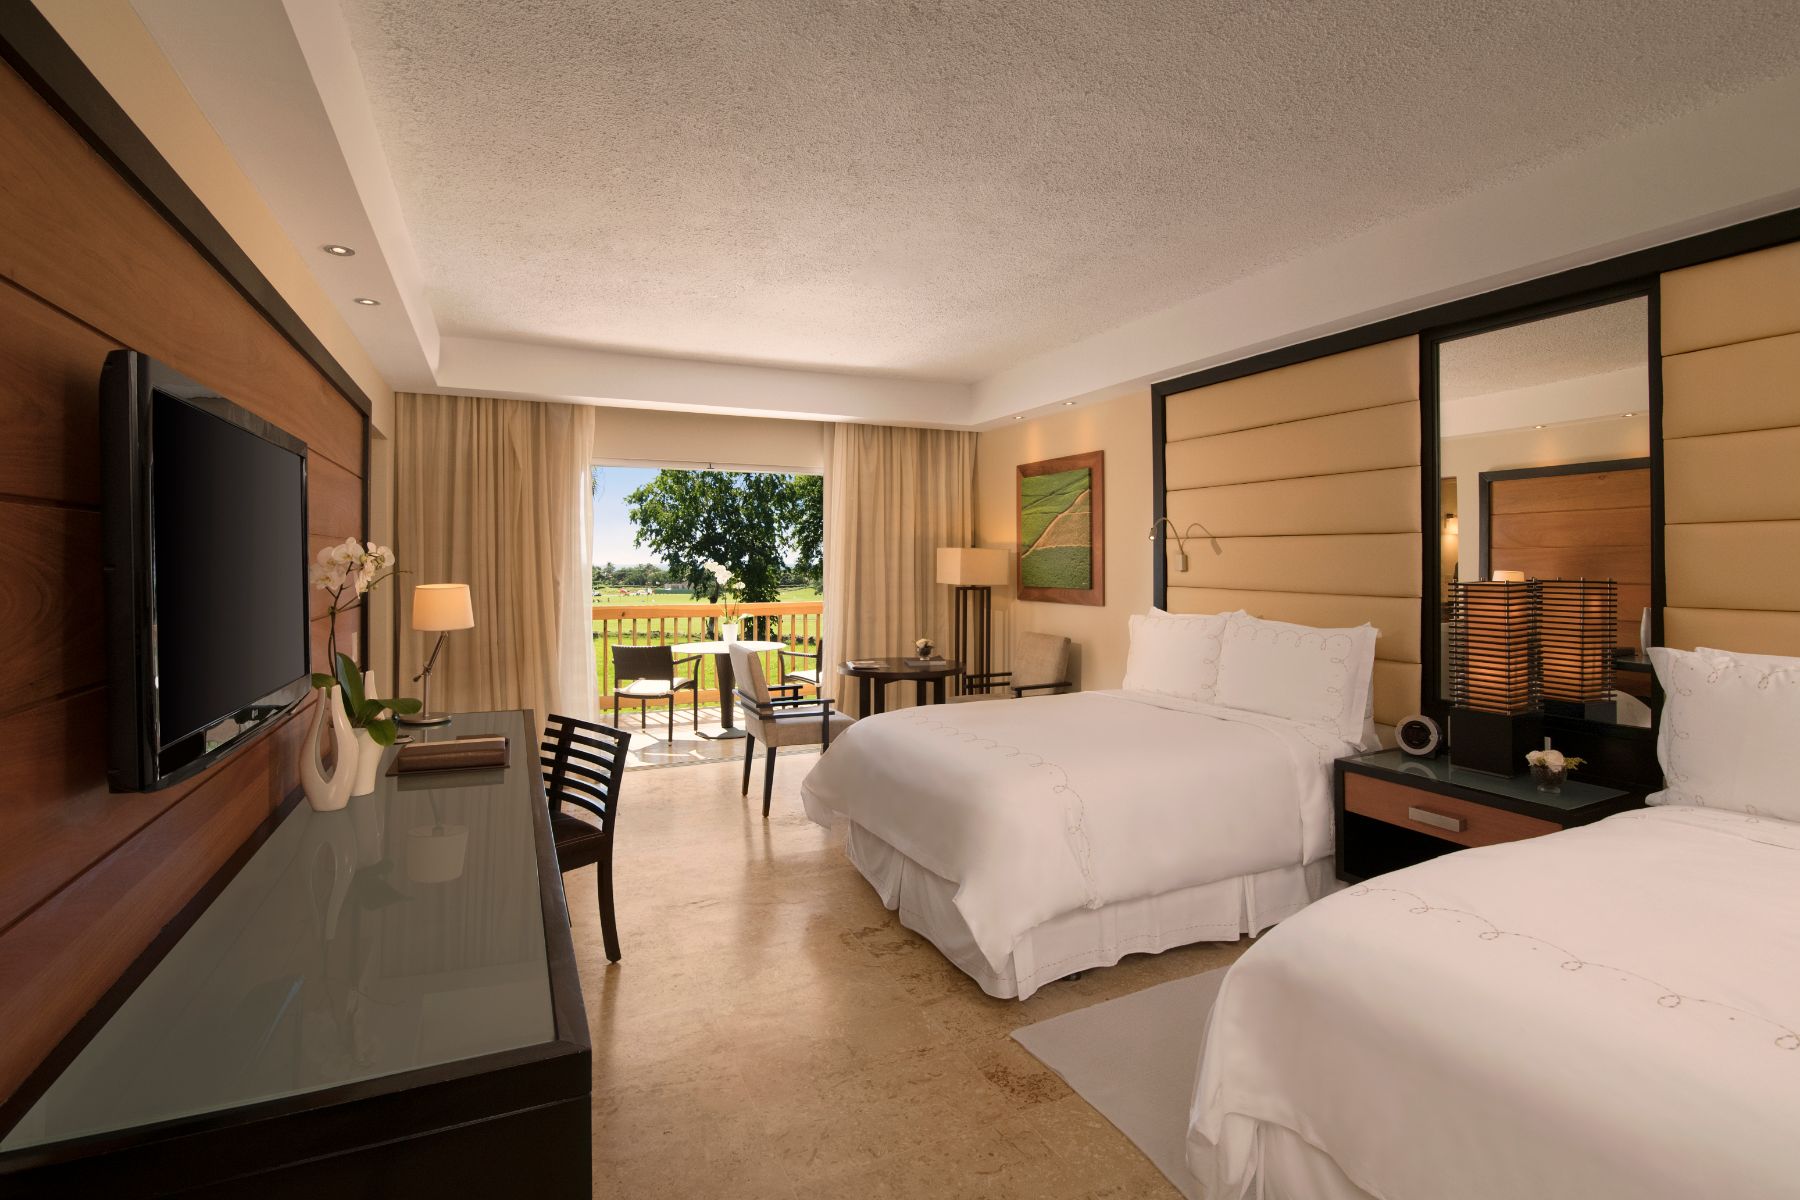 Dominican Republic Hotel Room With Patio